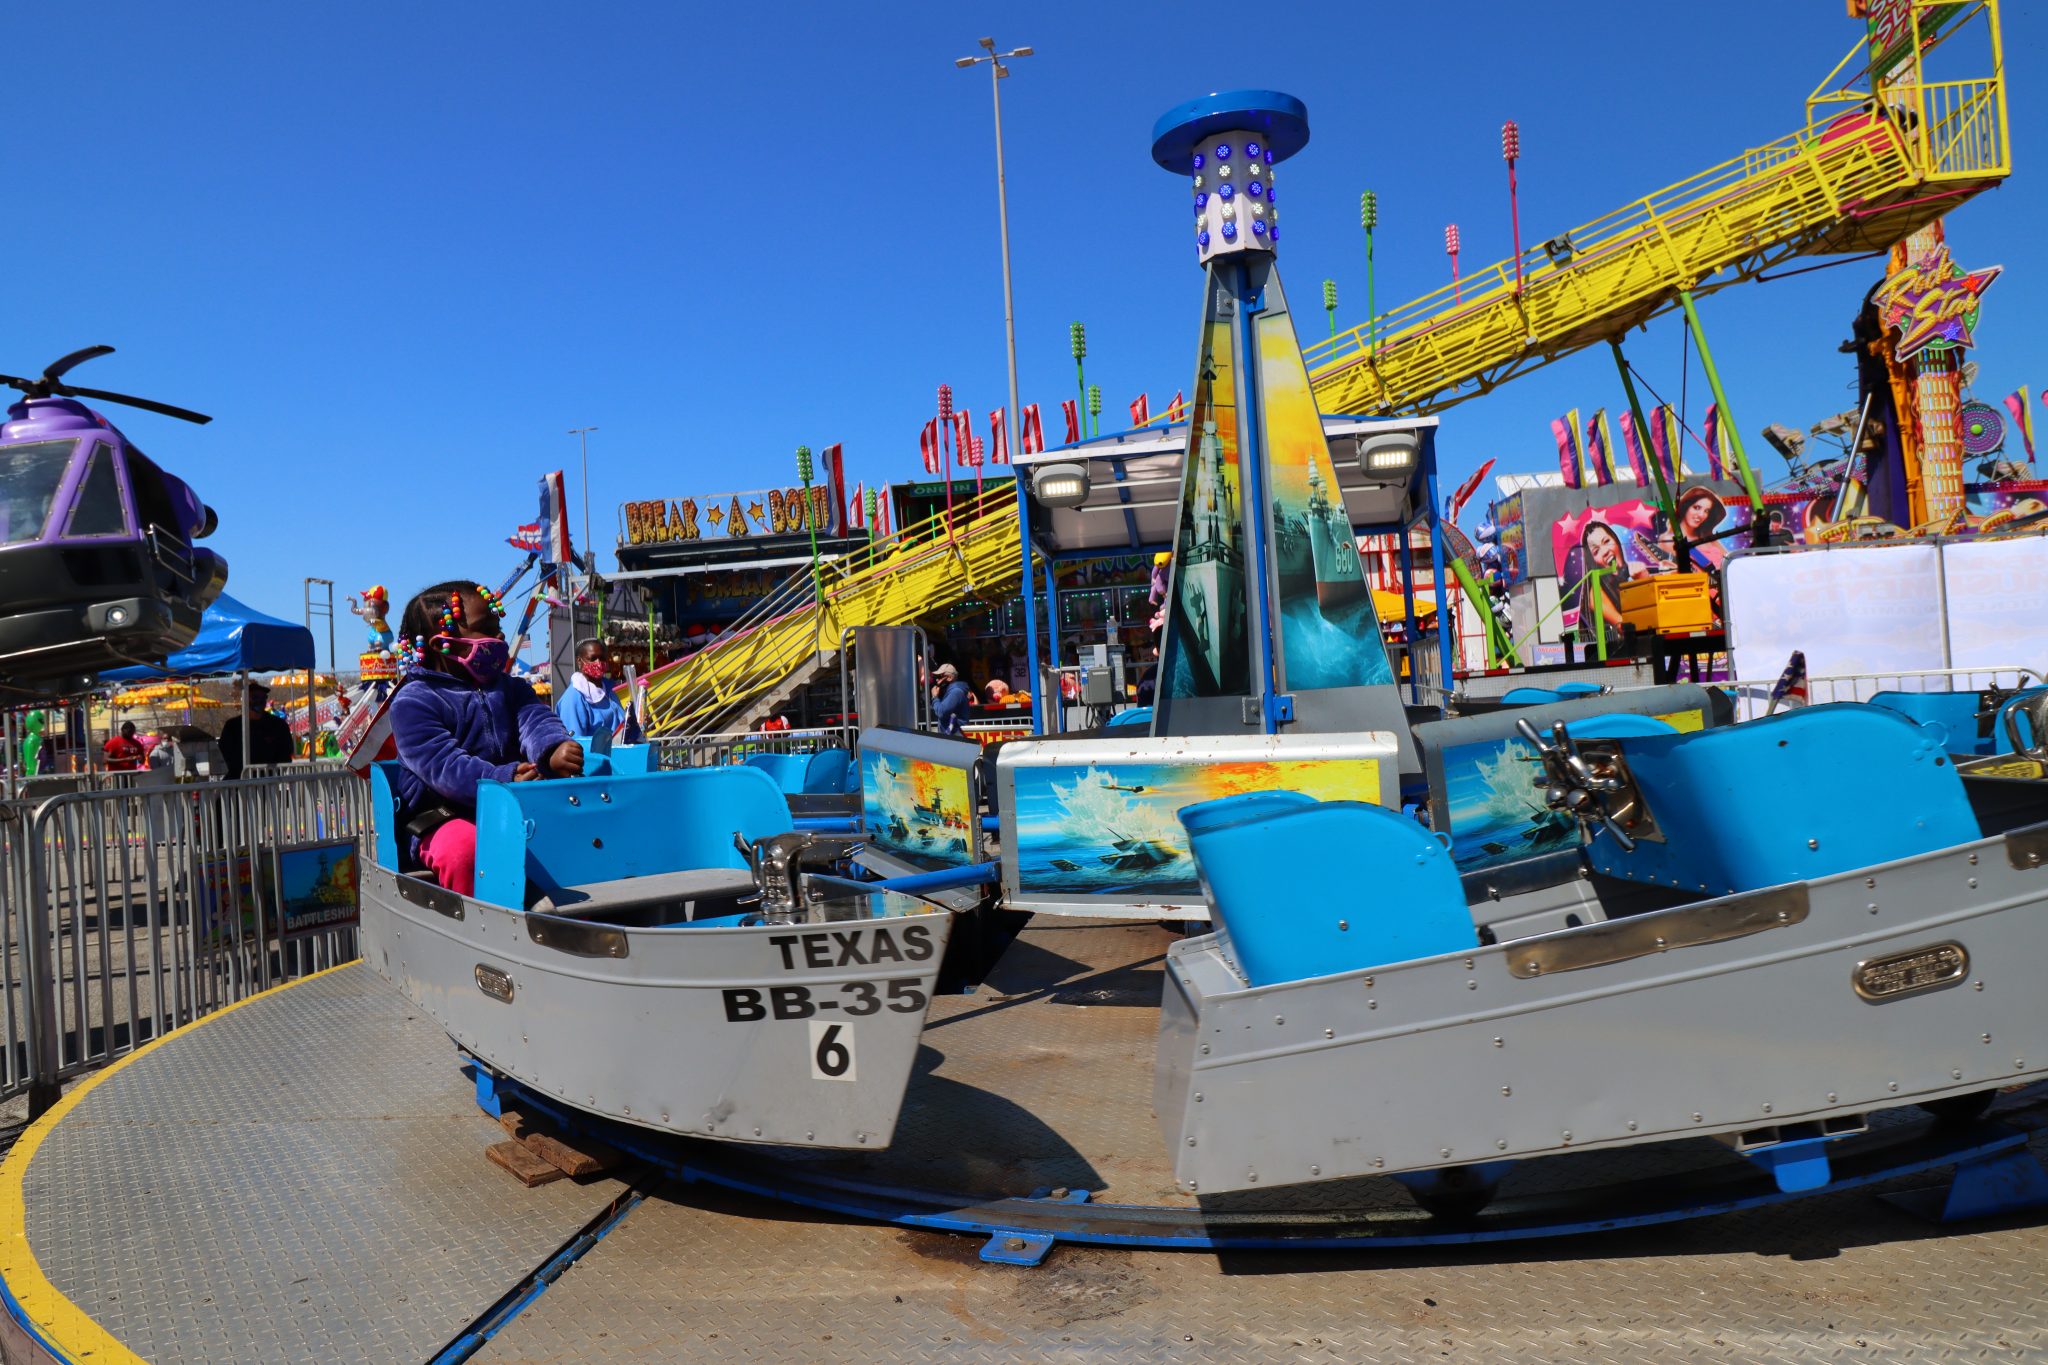 Carnival & Amusement Park Rides Dreamland Amusements East Coast